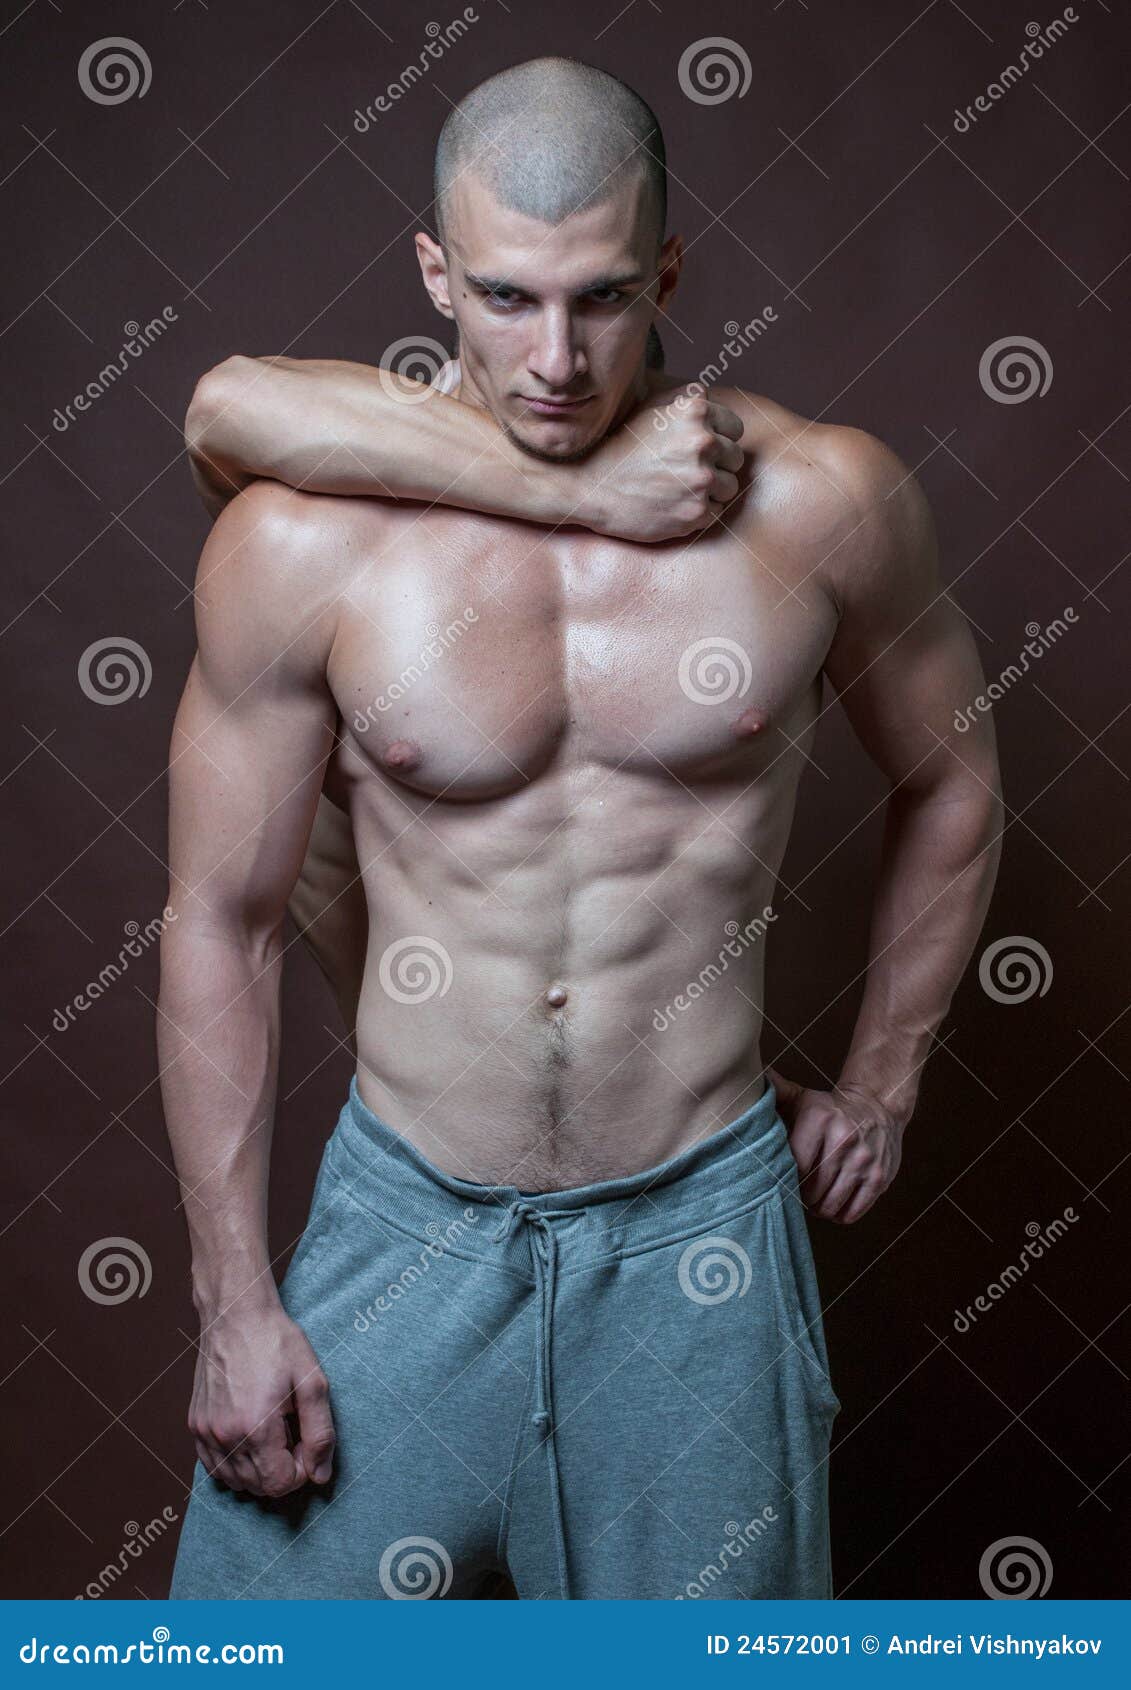 Male To Male Choke And Strangle